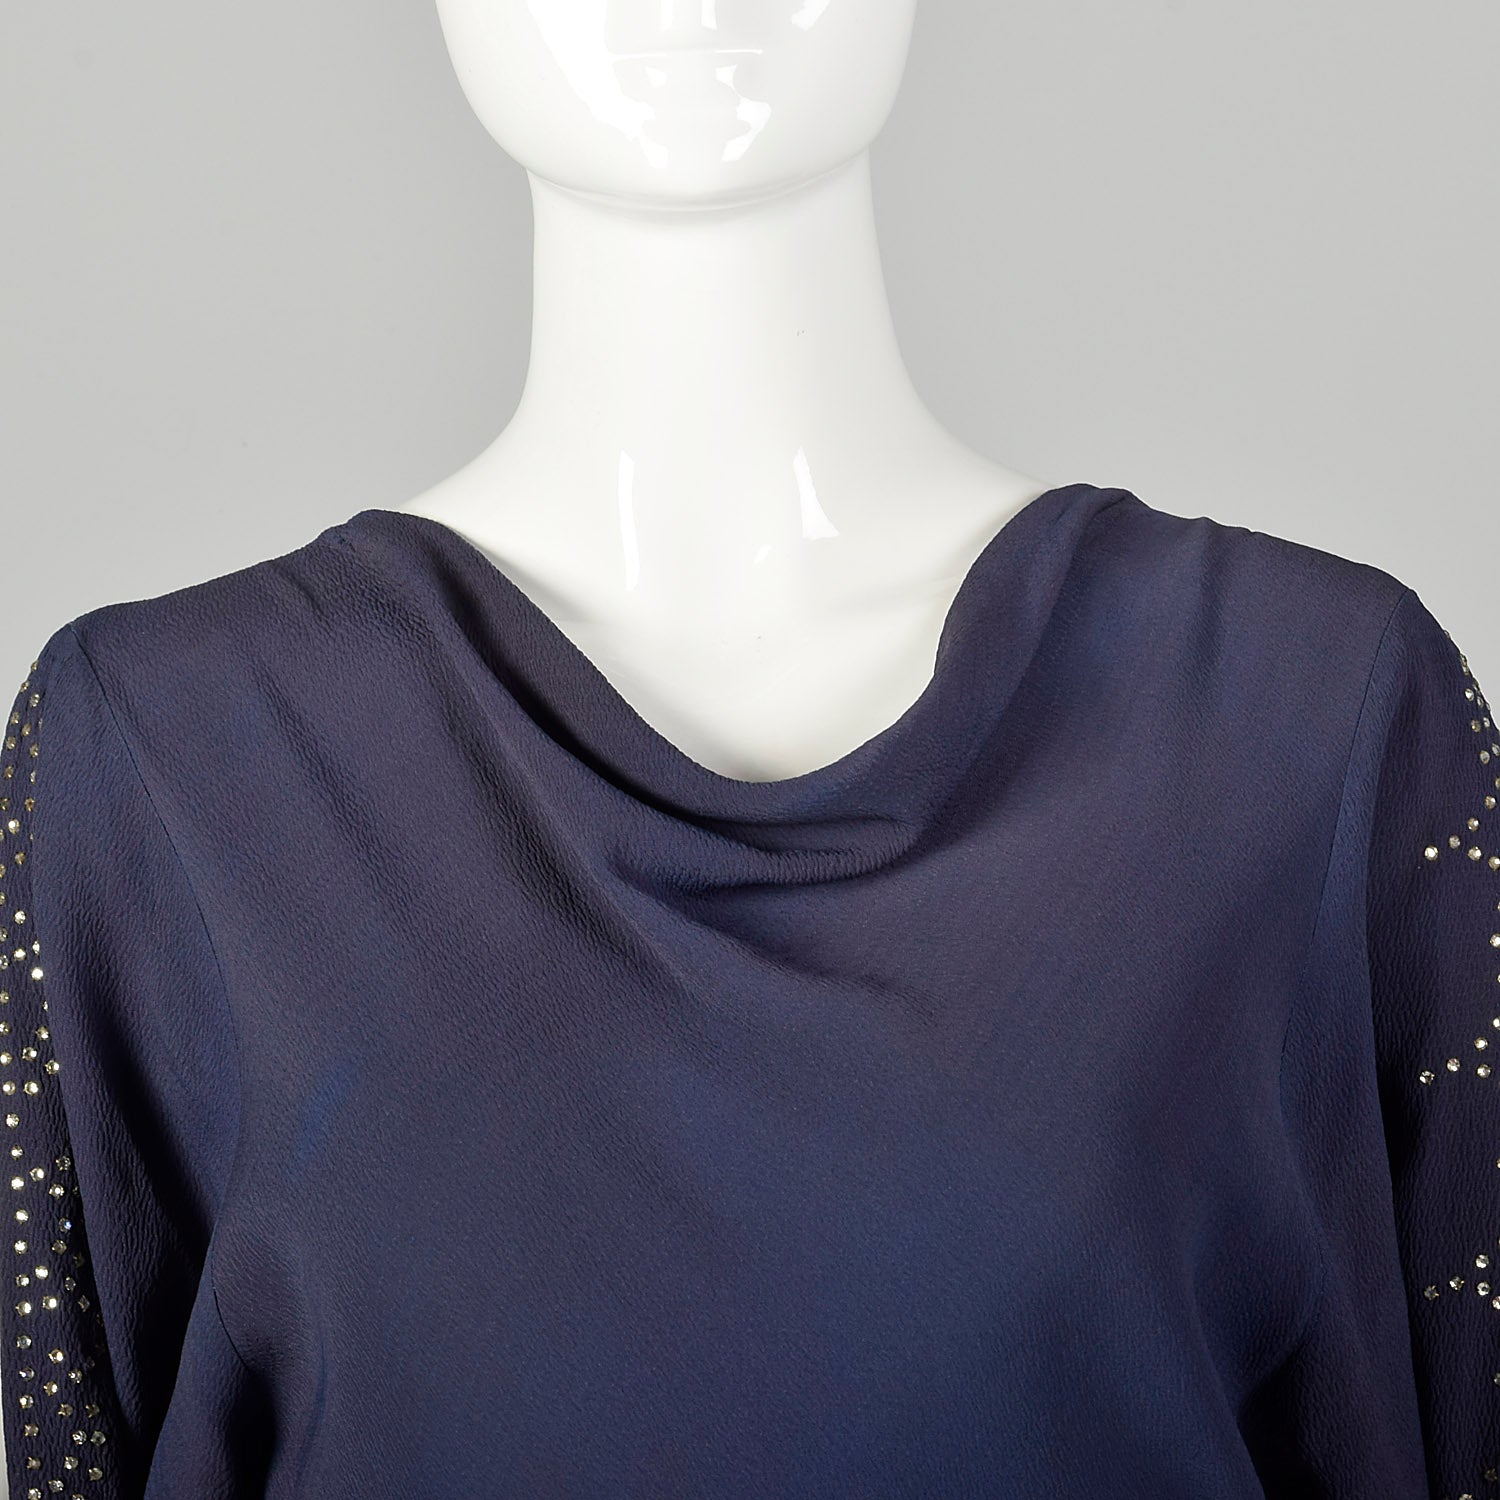 Small 1930s Blue Dress Bias Cut Rhinestone Slit Long Sleeve Evening Gown